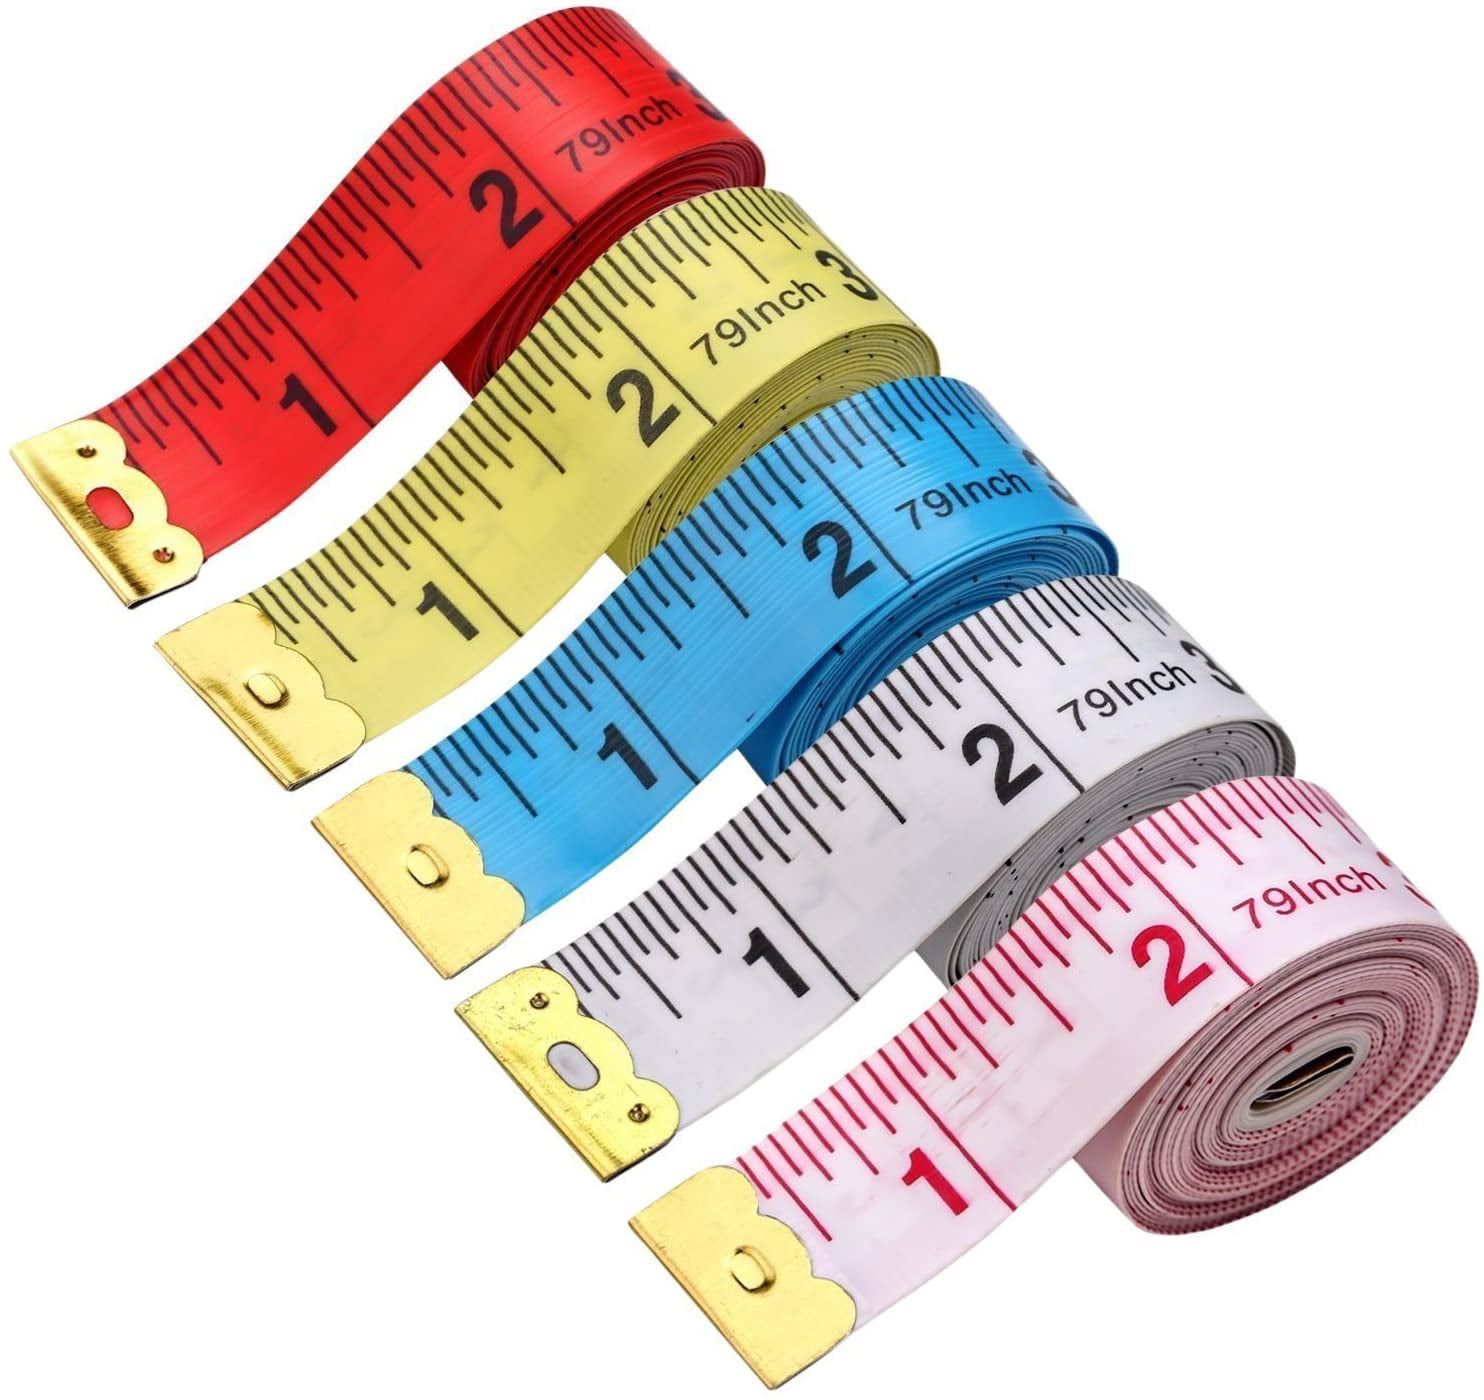 1pcs Body Measuring Ruler Sewing Cloth Tailor Tape Measure Soft 200cm Long